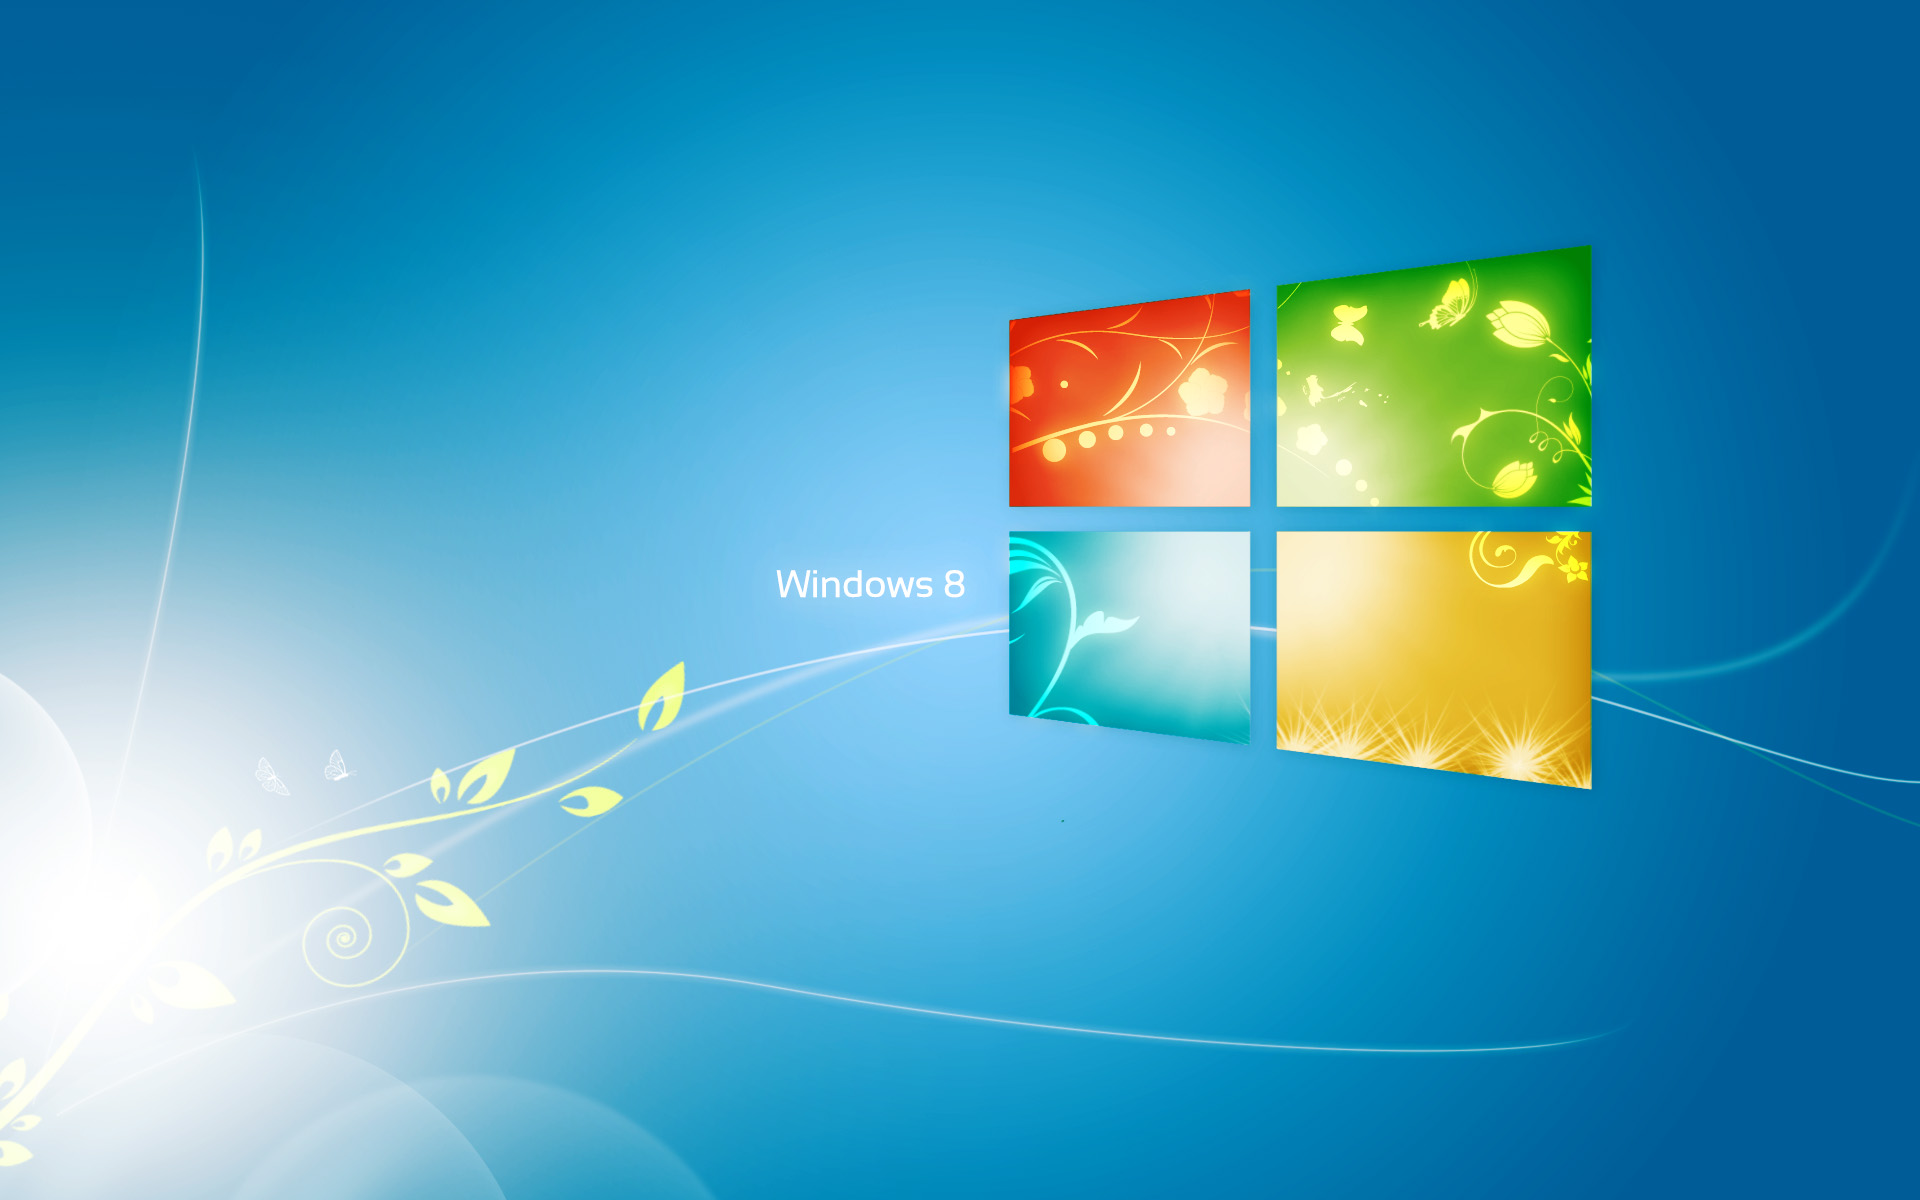 Read How to Change Windows 8 Start Screen Background using Windows 8